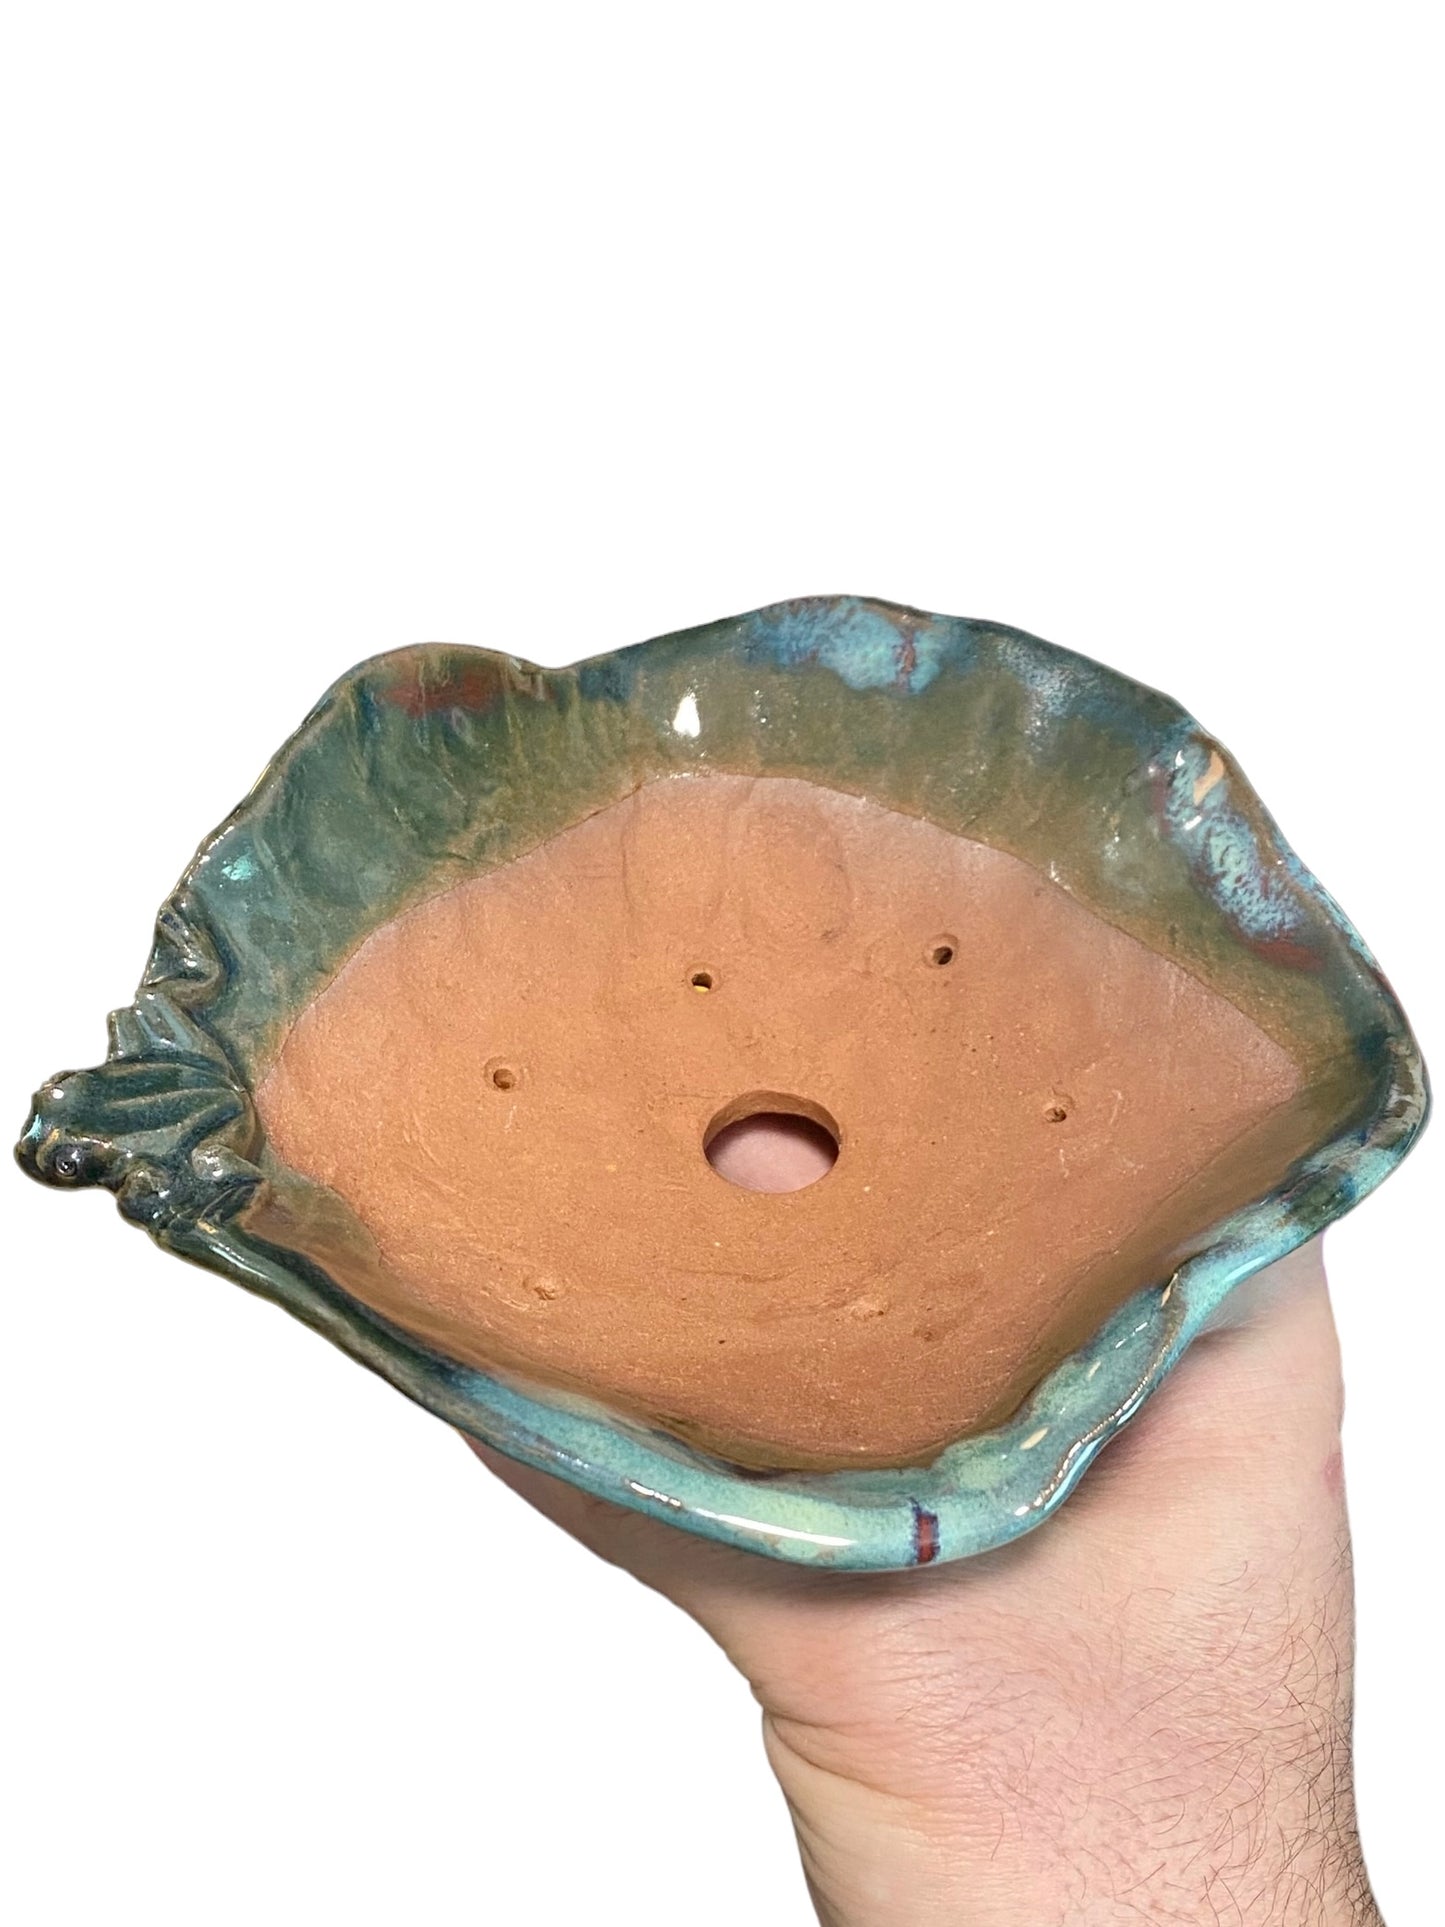 Masashi - Frog on a Glazed Bowl Bonsai or Accent Pot